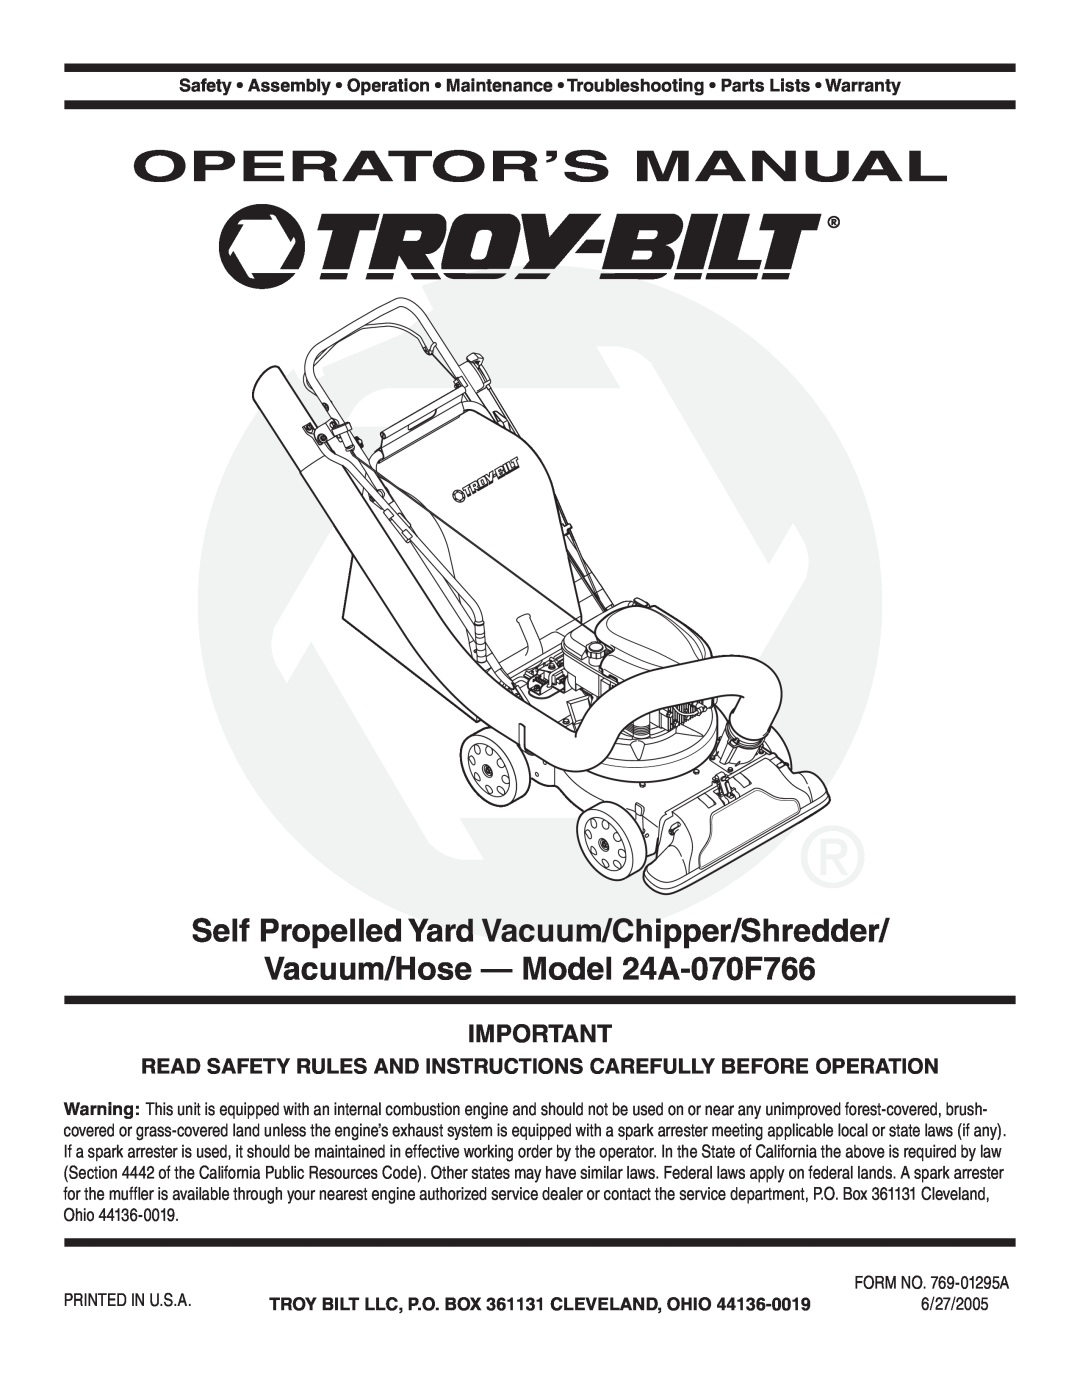 Troy-Bilt 24A-070F768 warranty Operator’S Manual, Self Propelled Yard Vacuum/Chipper/Shredder 